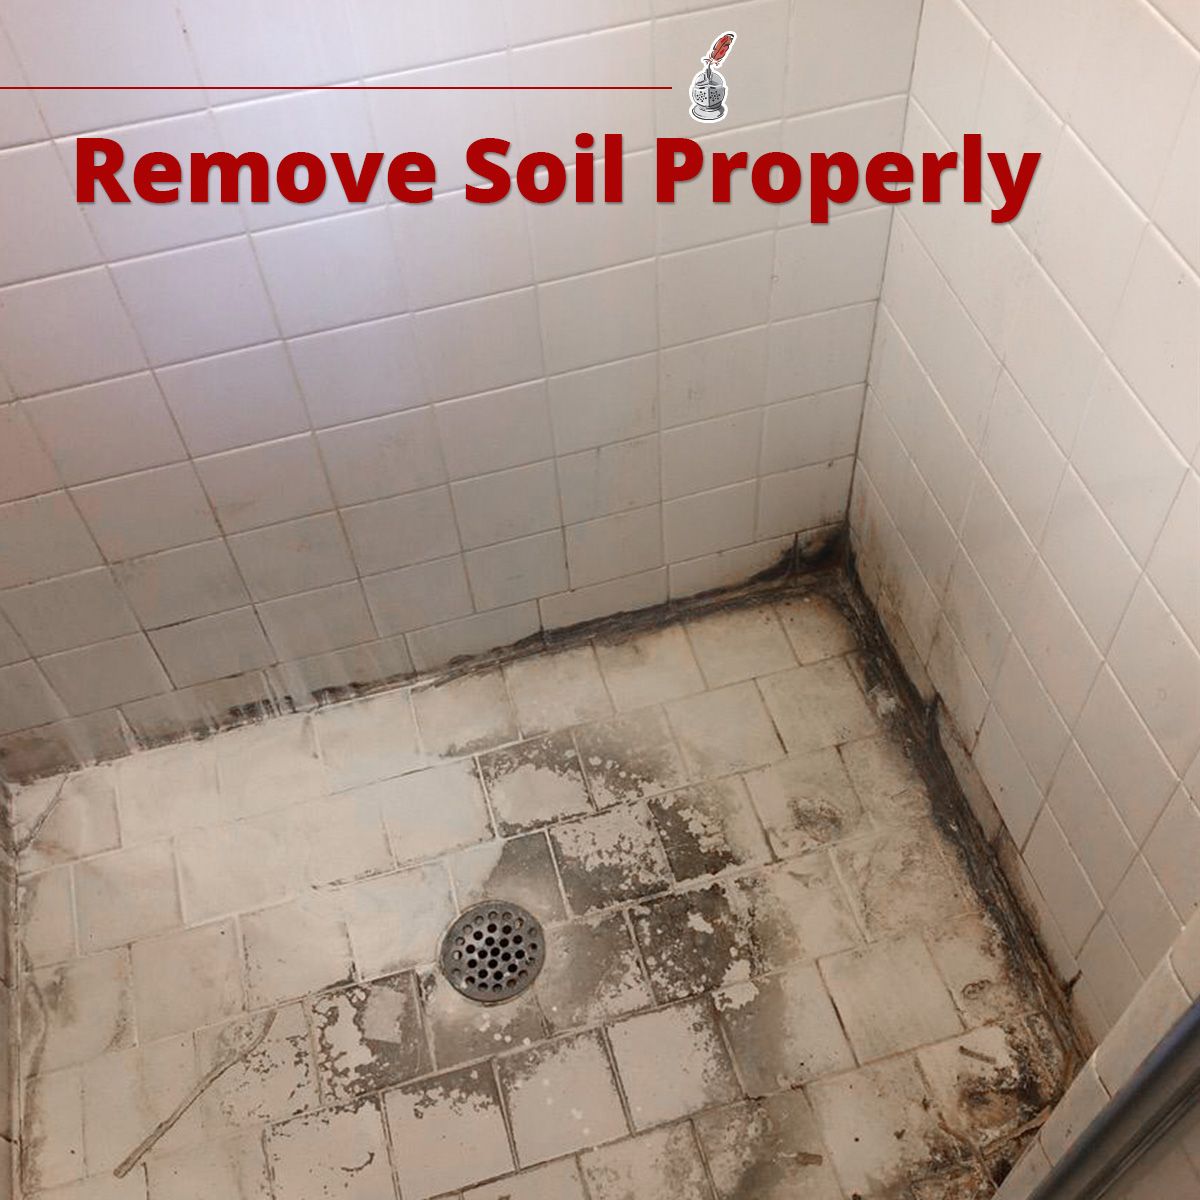 Remove Soil Properly